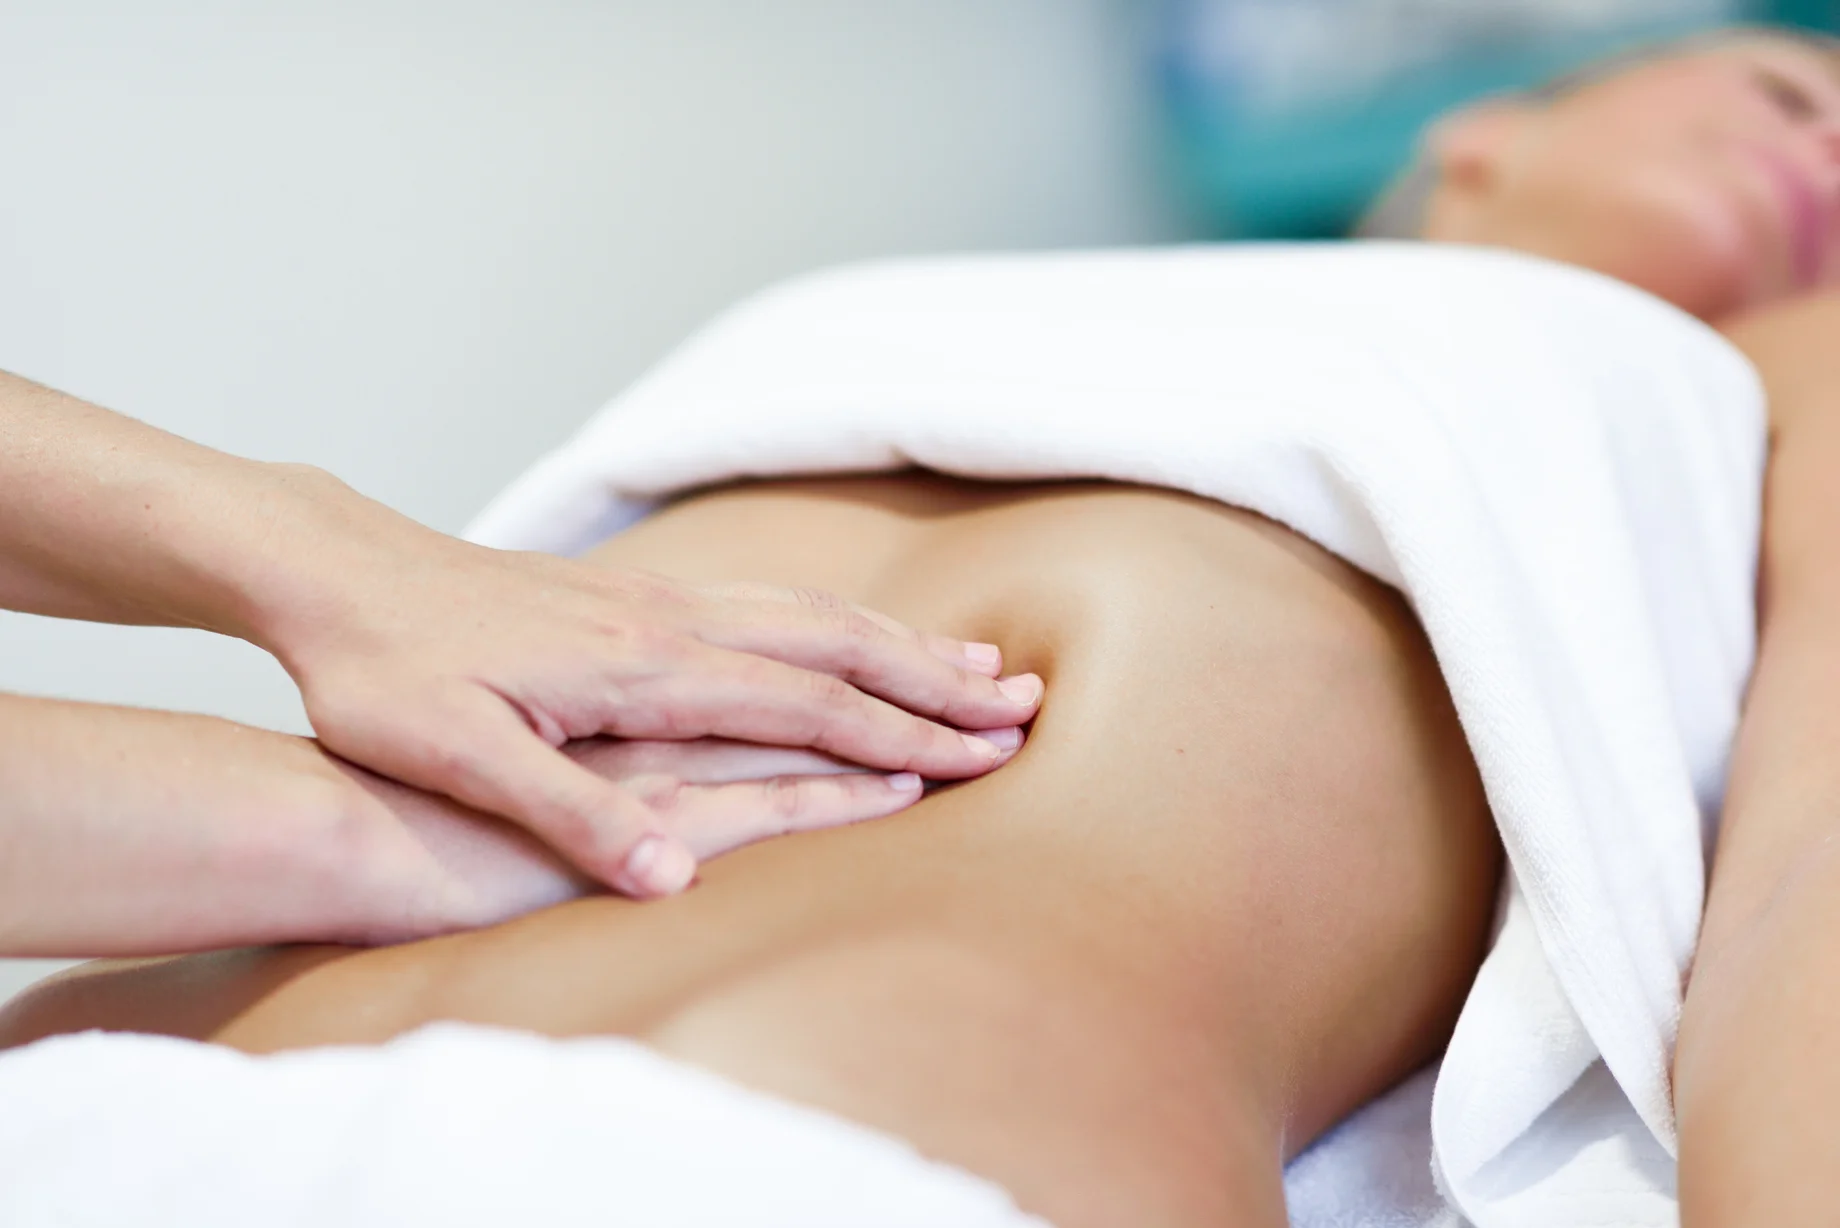 hands-massaging-female-abdomen-therapist-applying-pressure-belly